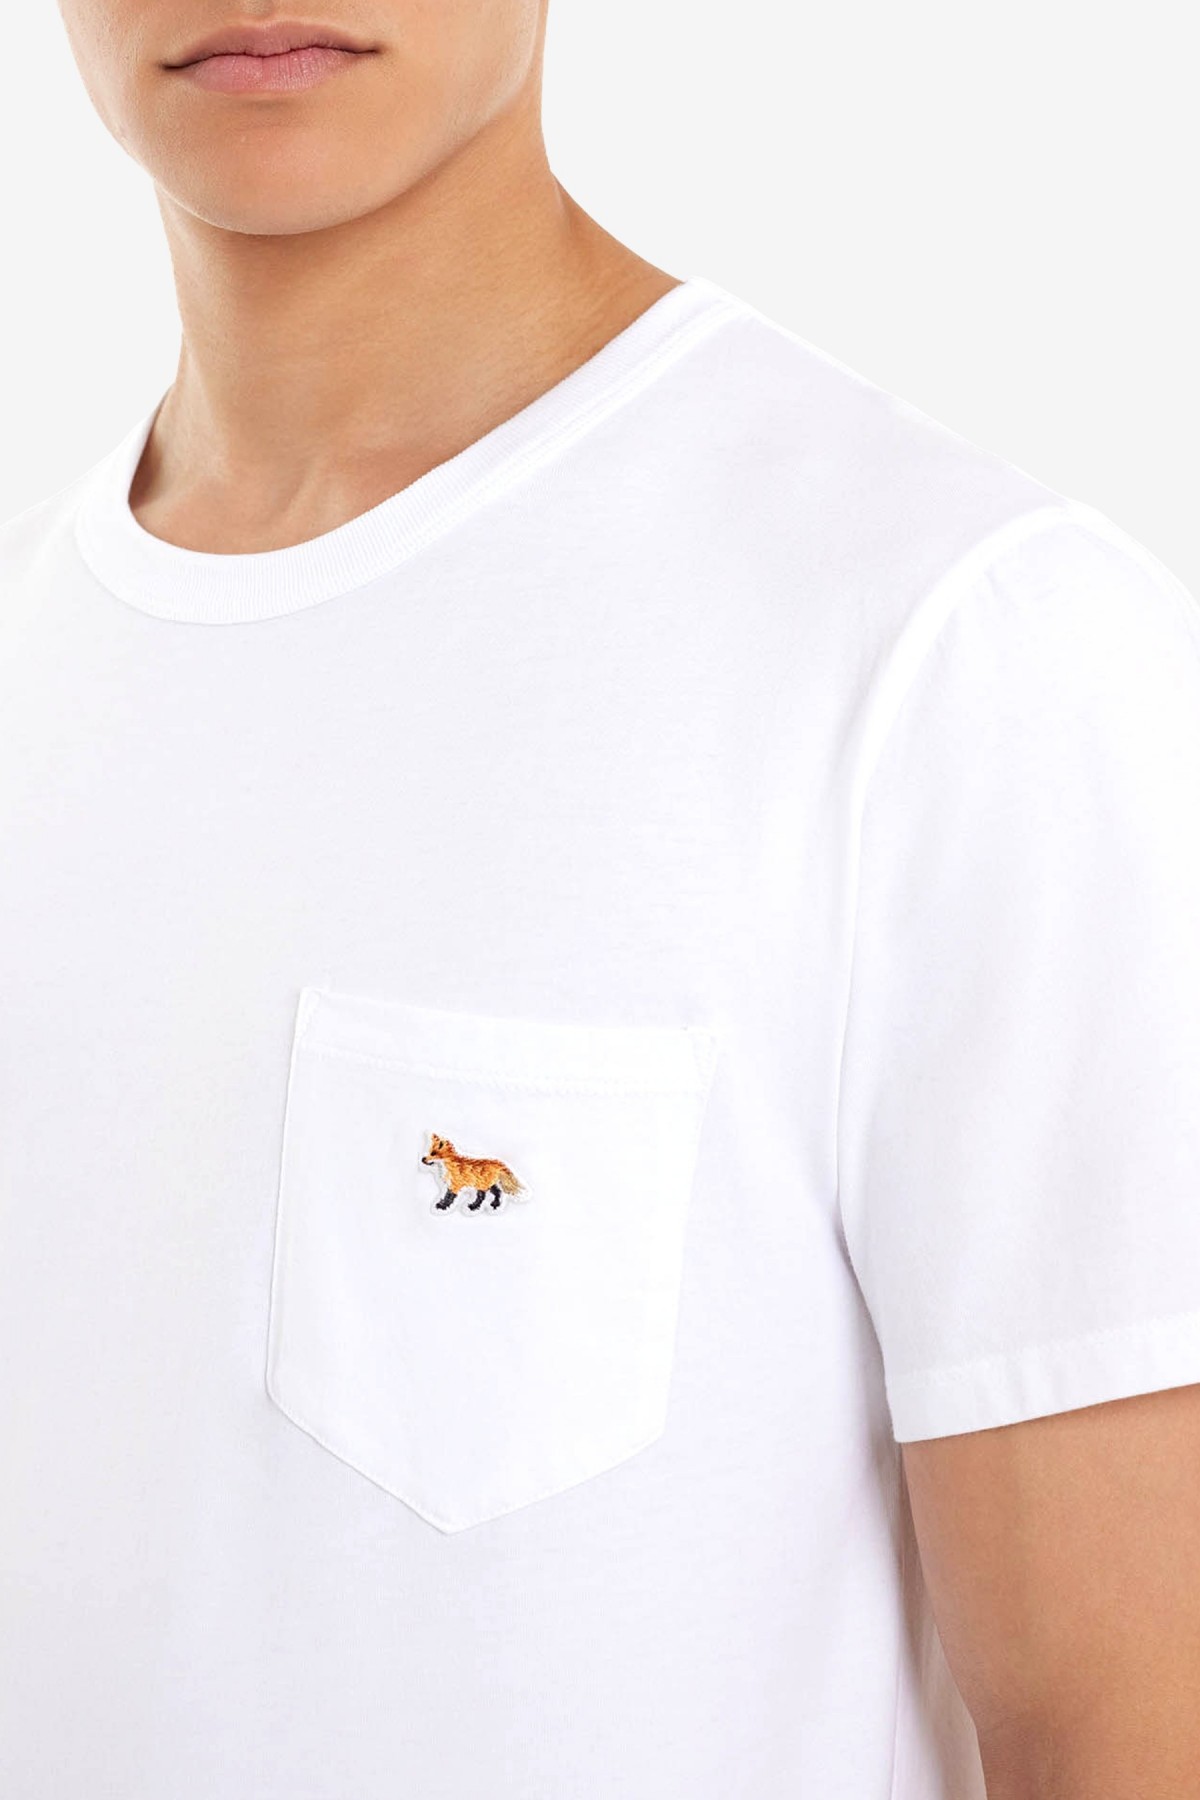 Maison Kitsuné Baby Fox Patch Pocket Tee Shirt in White